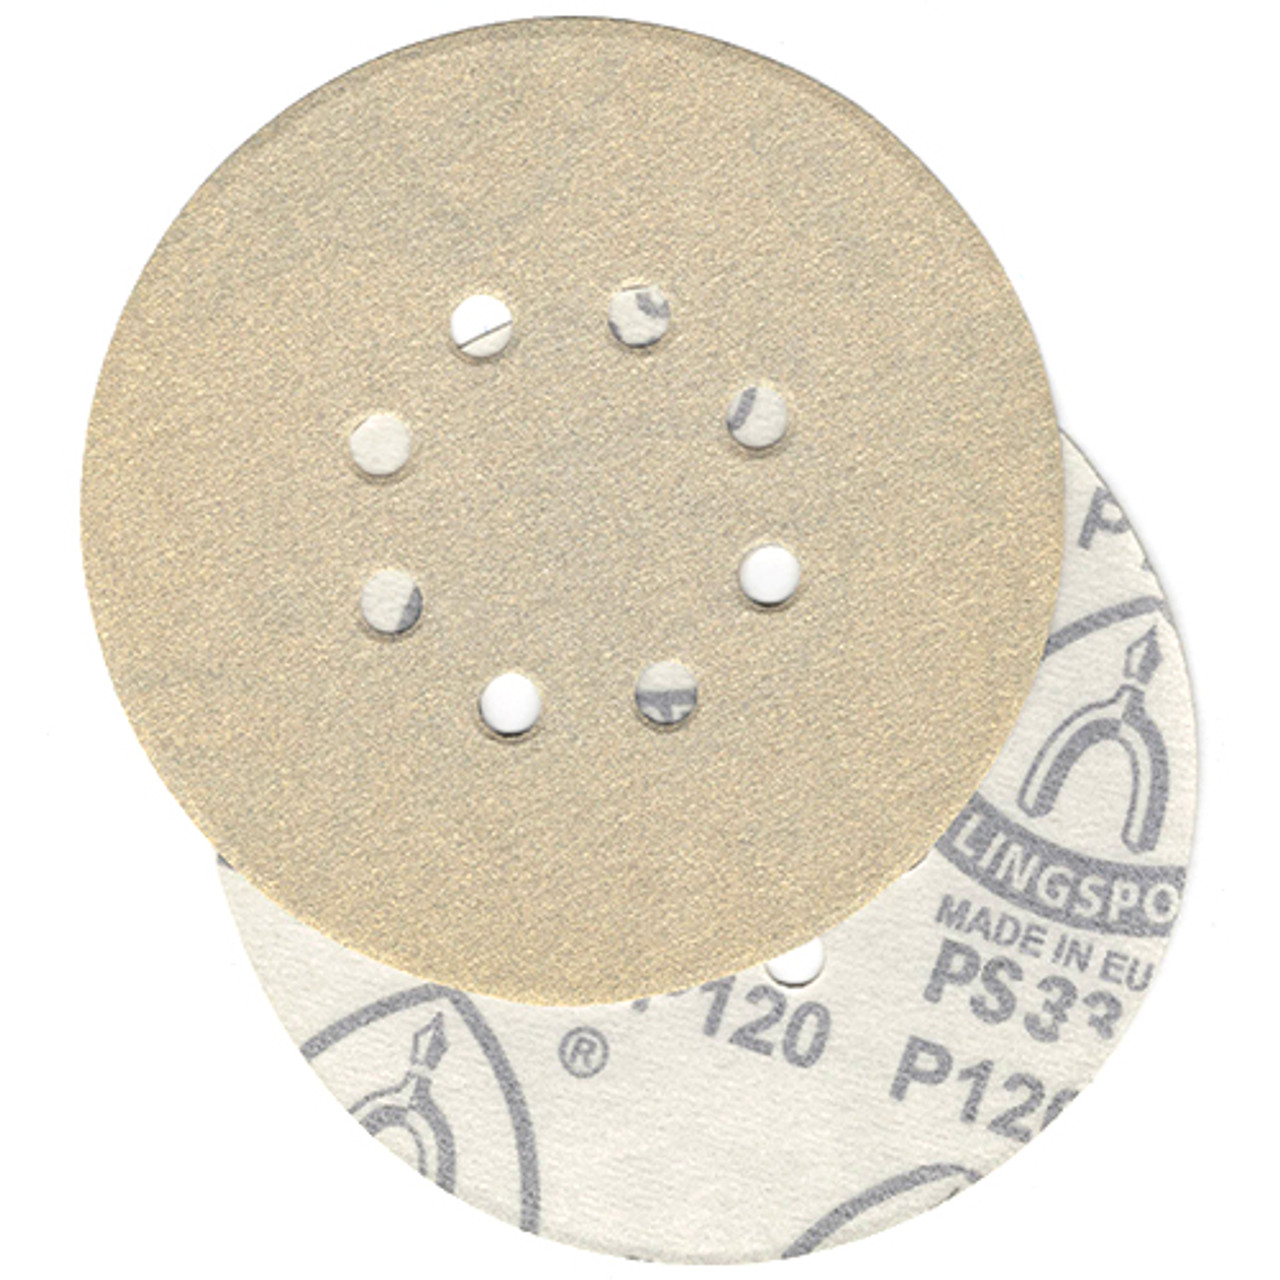 Klingspor Abrasives Stearate Aluminum Oxide, PS33, 6"x 8 Hole, 240 Grit, Hook & Loop Discs, 50pk